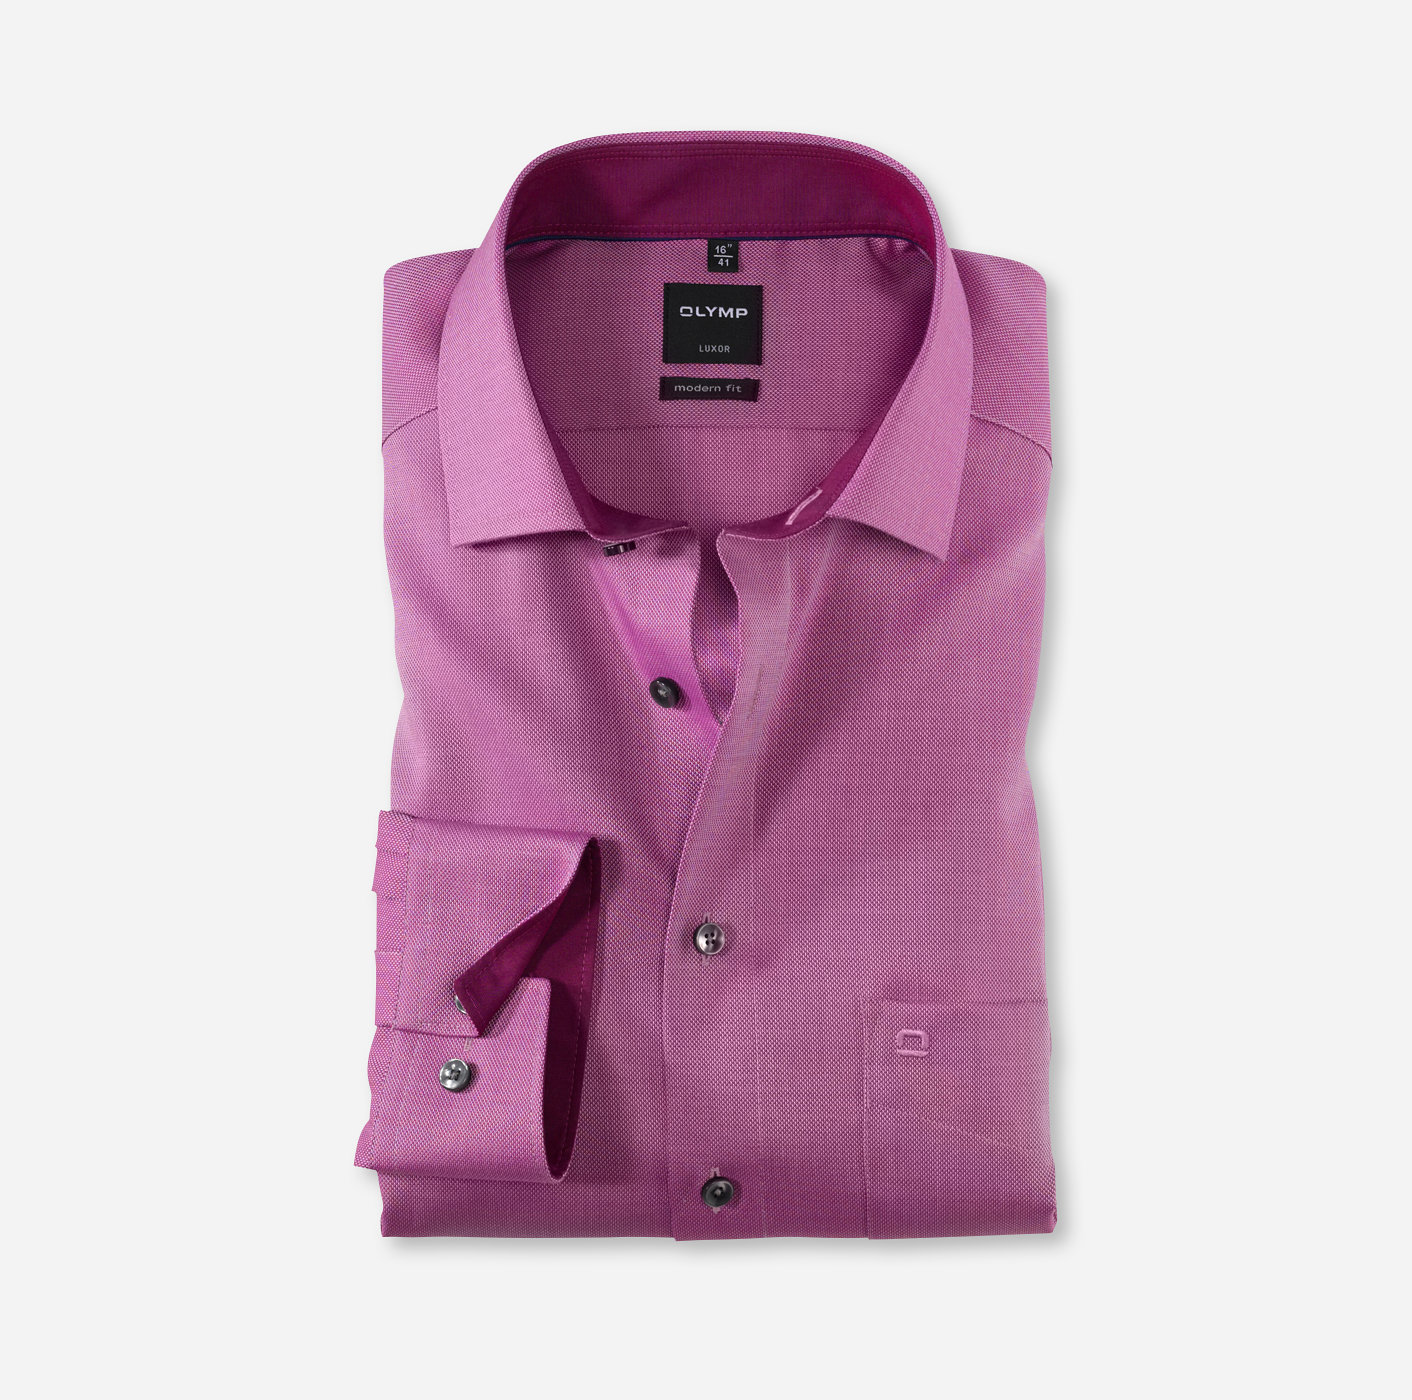 OLYMP Luxor, modern fit, Business shirt, Global Kent, Rose Bonbon